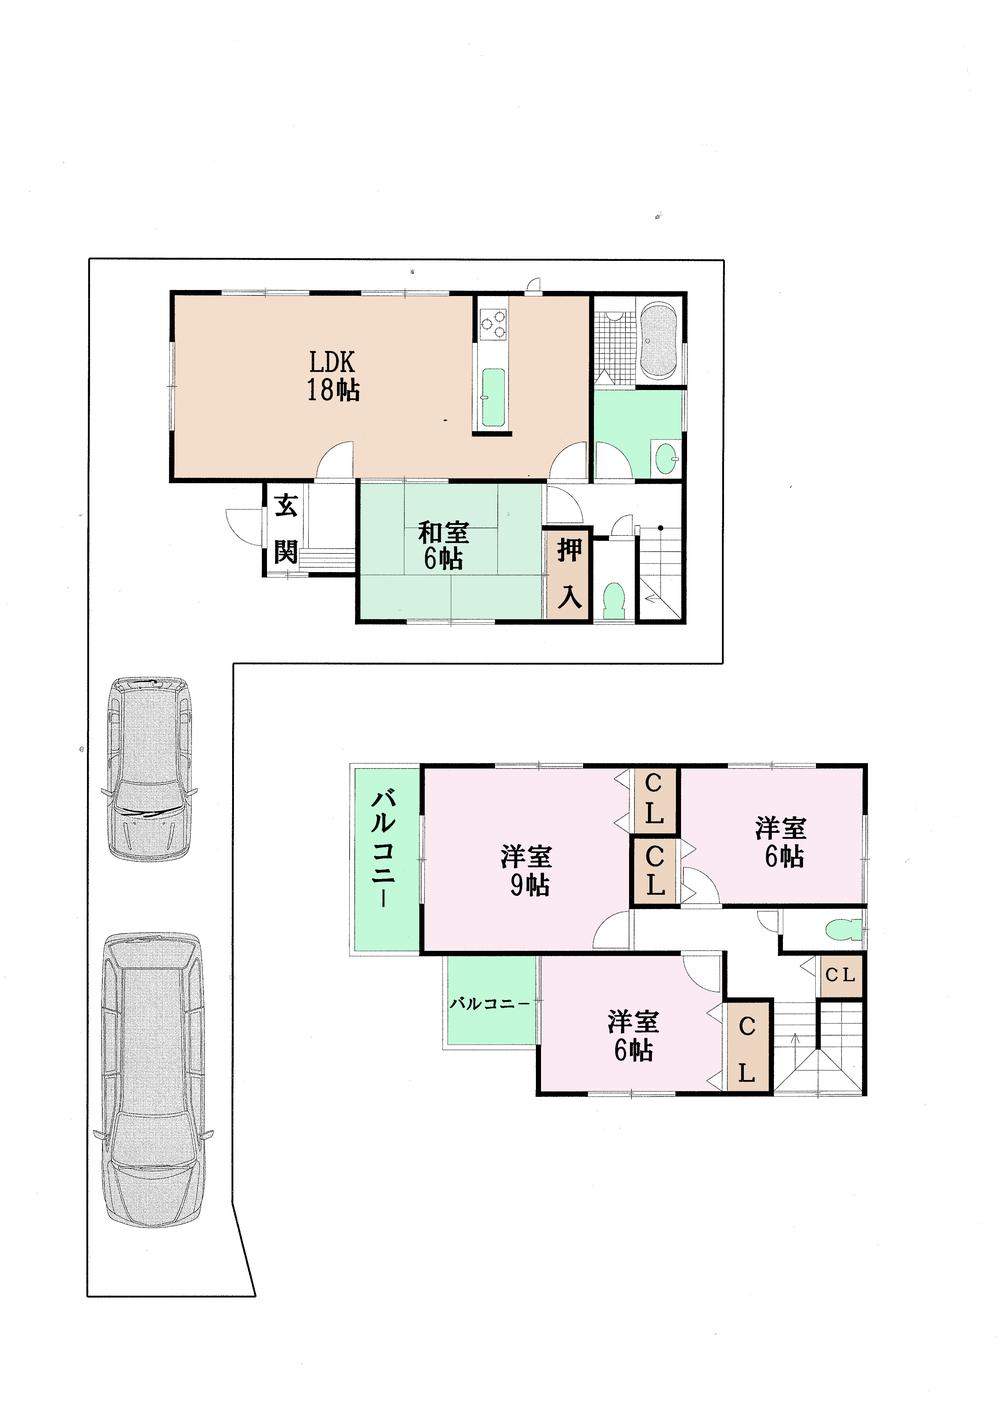 Floor plan. Price 27,800,000 yen, 4LDK, Land area 127.52 sq m , Building area 105.98 sq m